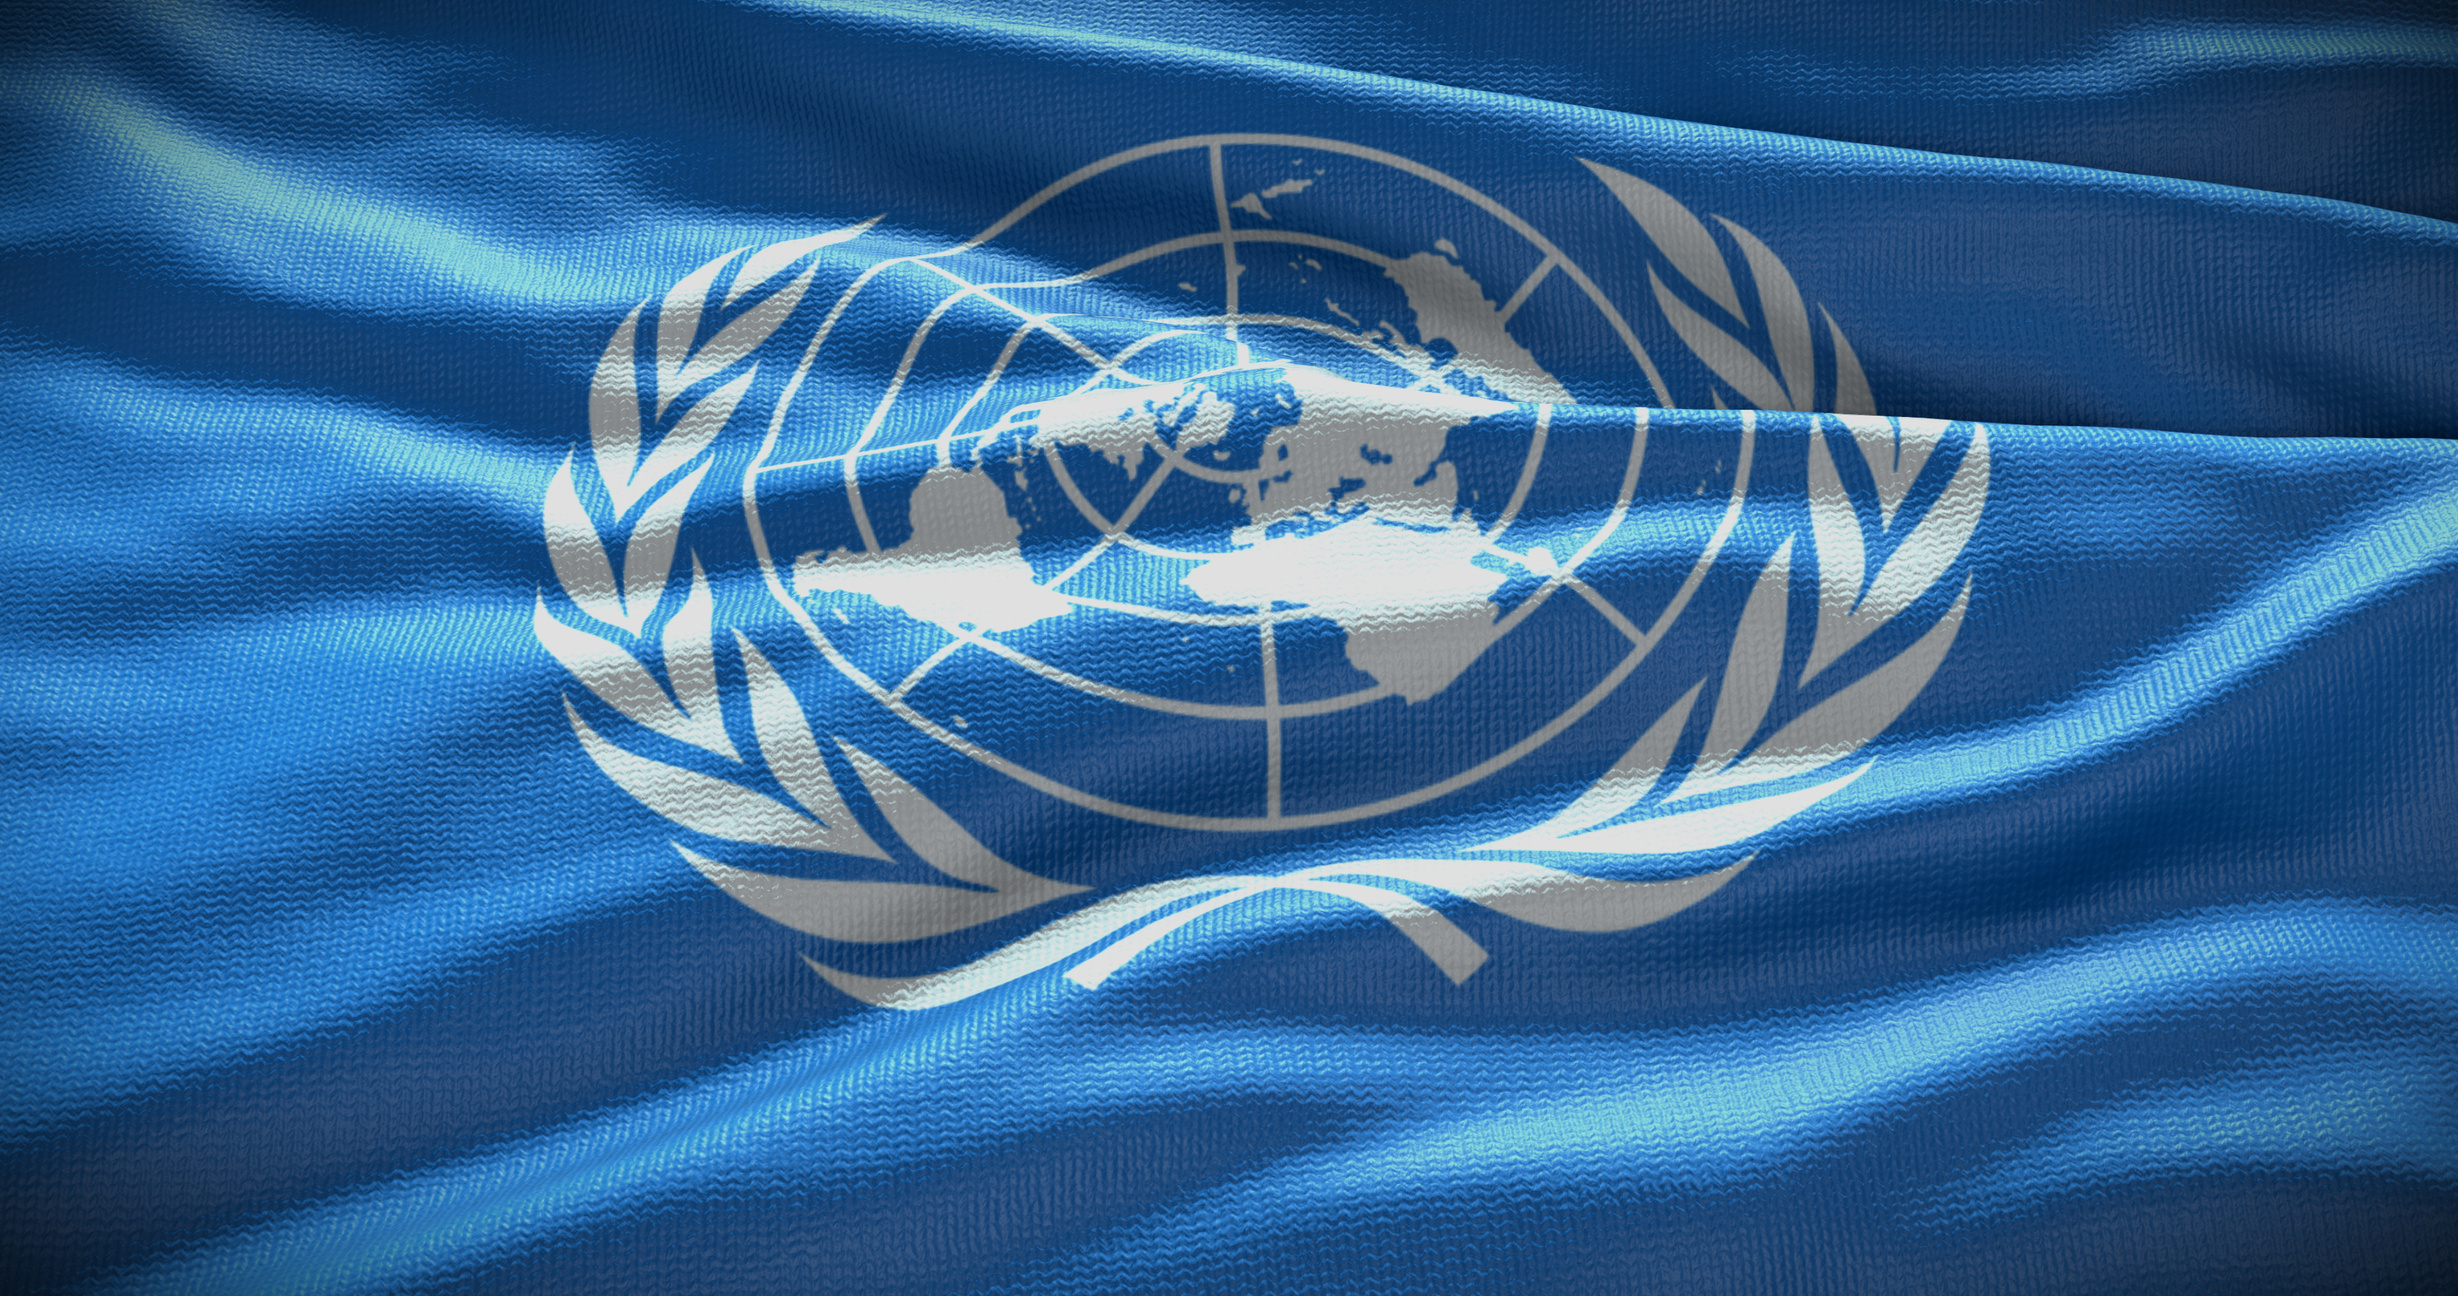 UN United Nations flag. Politics illustration